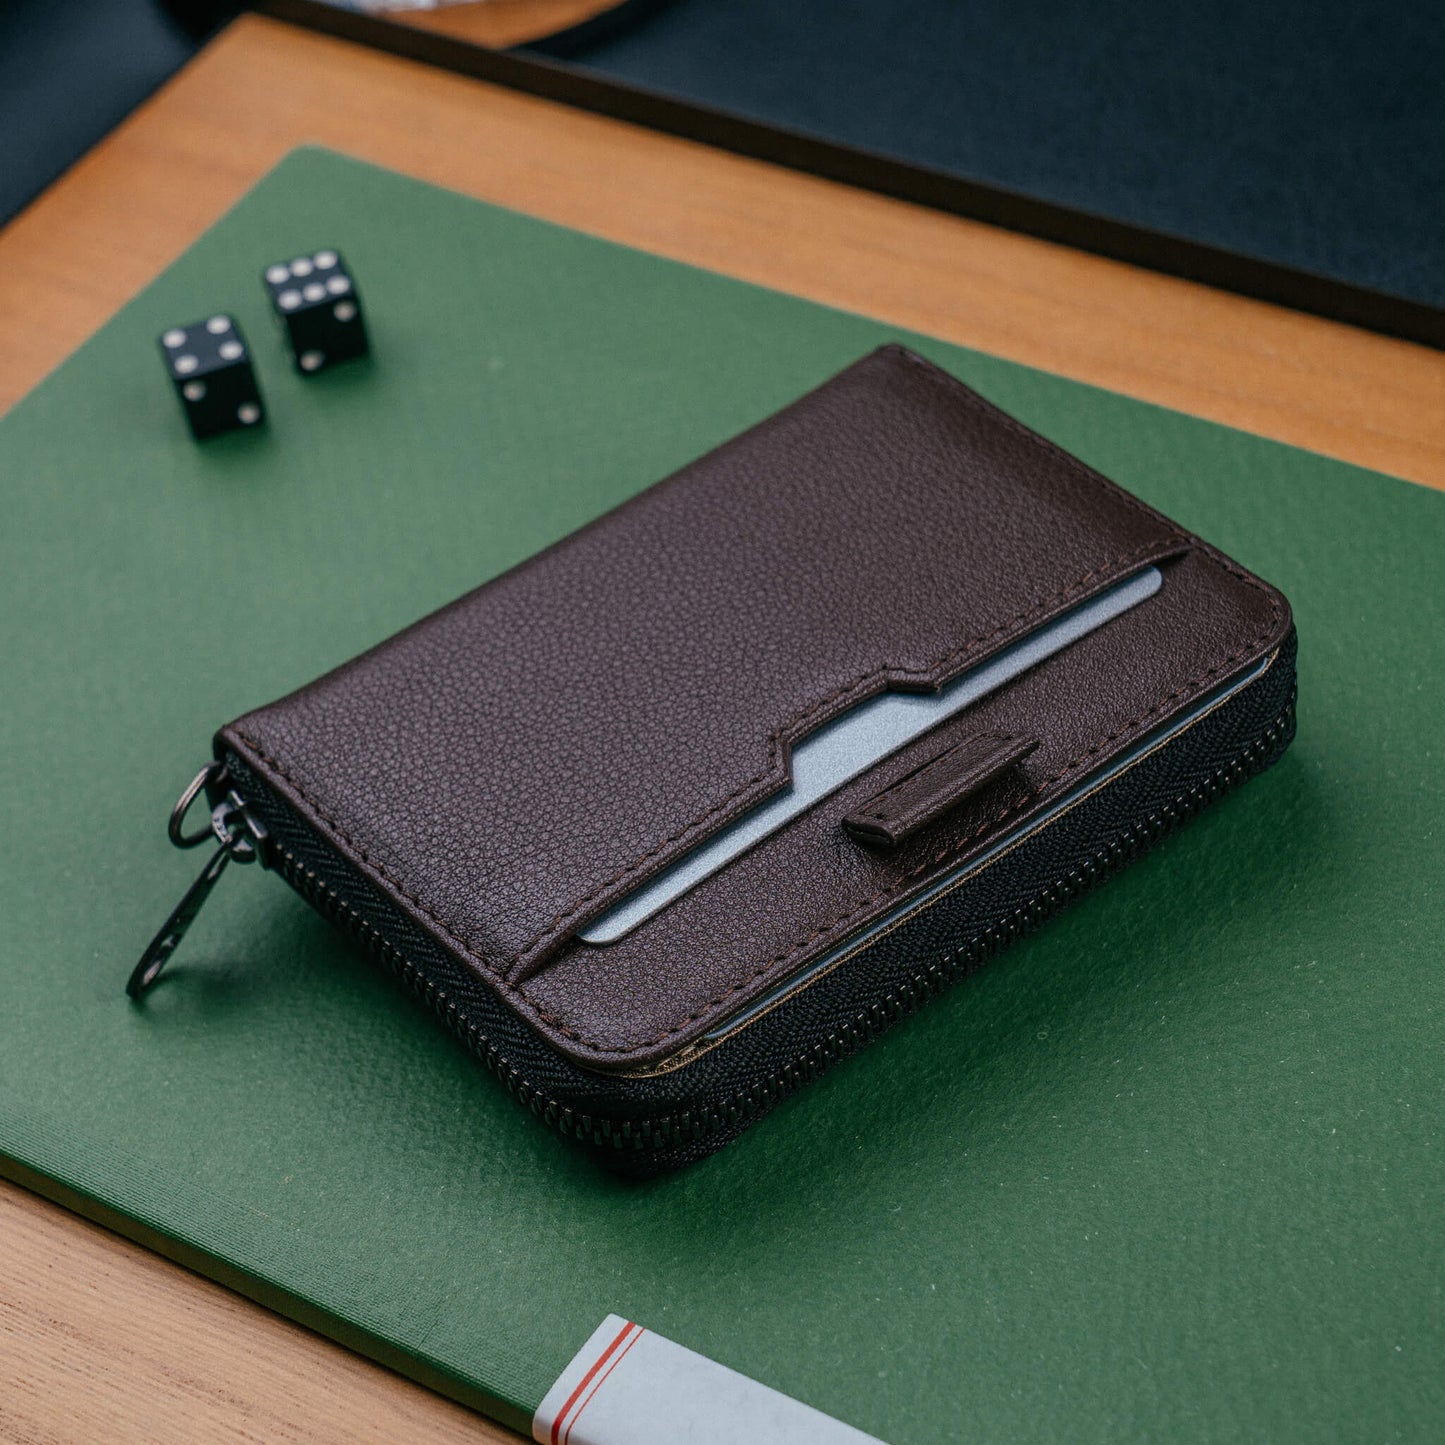 Mayfair leather wallet craftsmanship